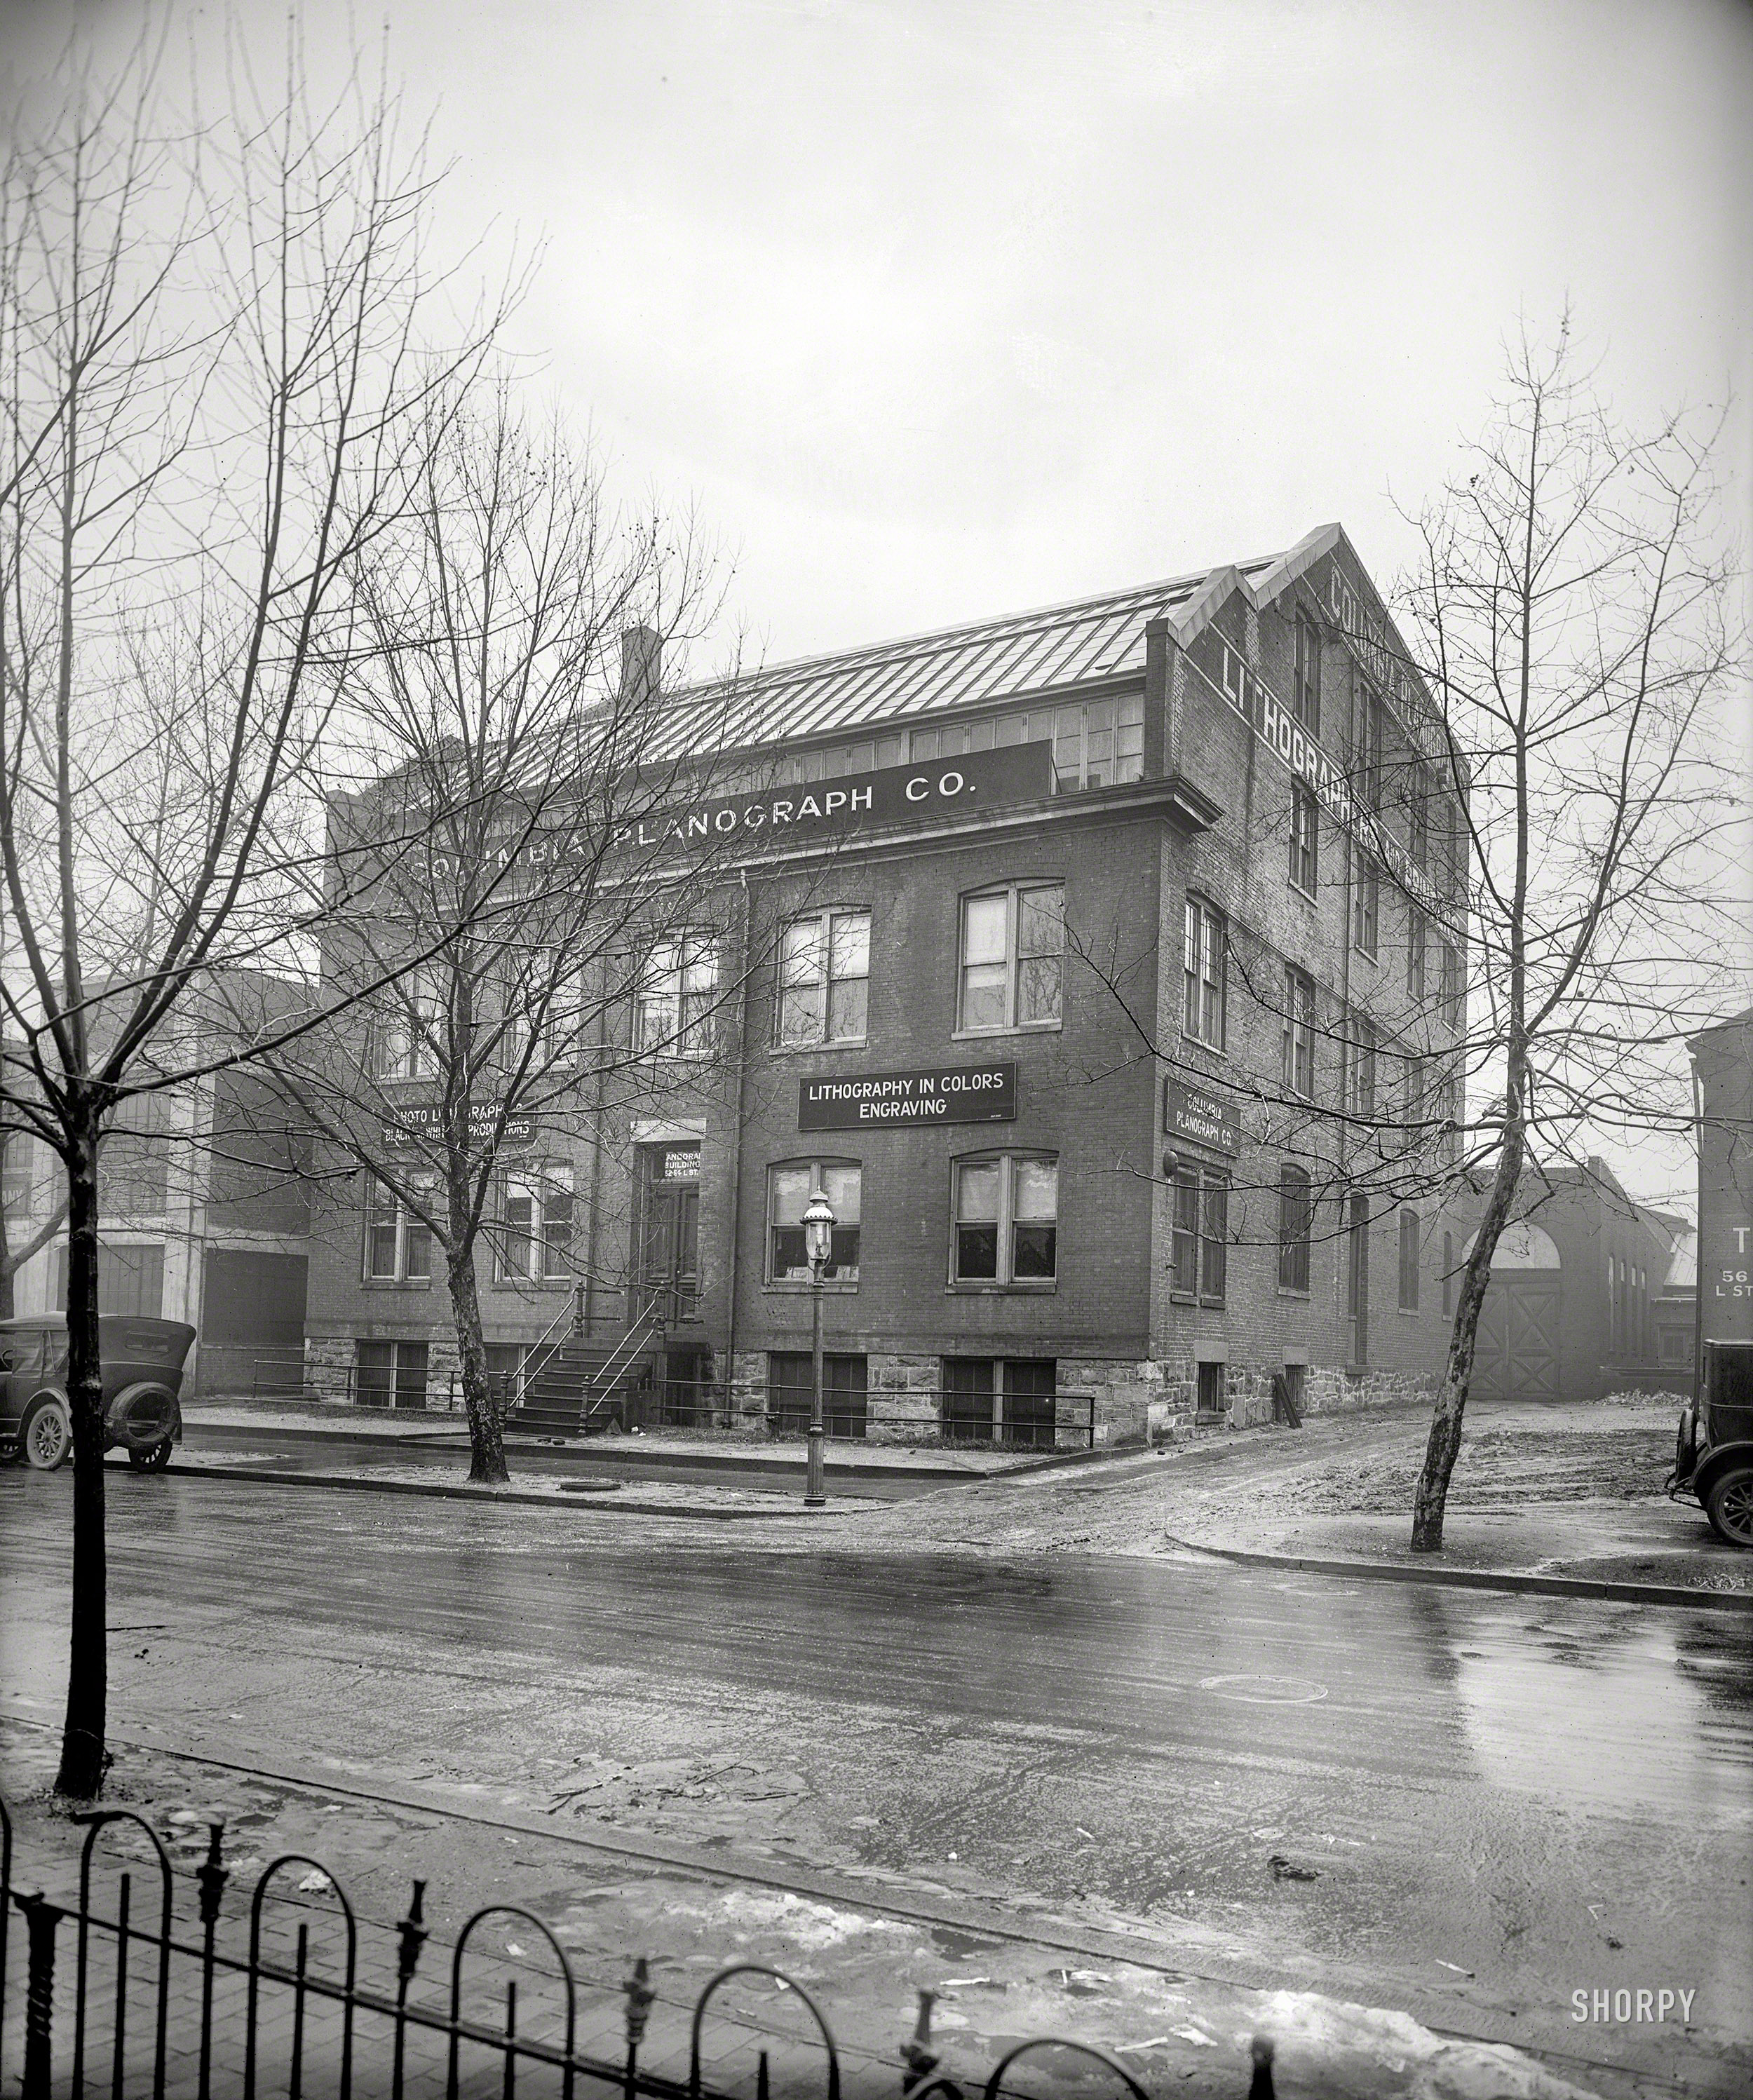 Washington, D.C., circa 1926. "Planograph Building, L Street N.E." Where business was flat. 8x10 inch glass negative, National Photo Co. View full size.